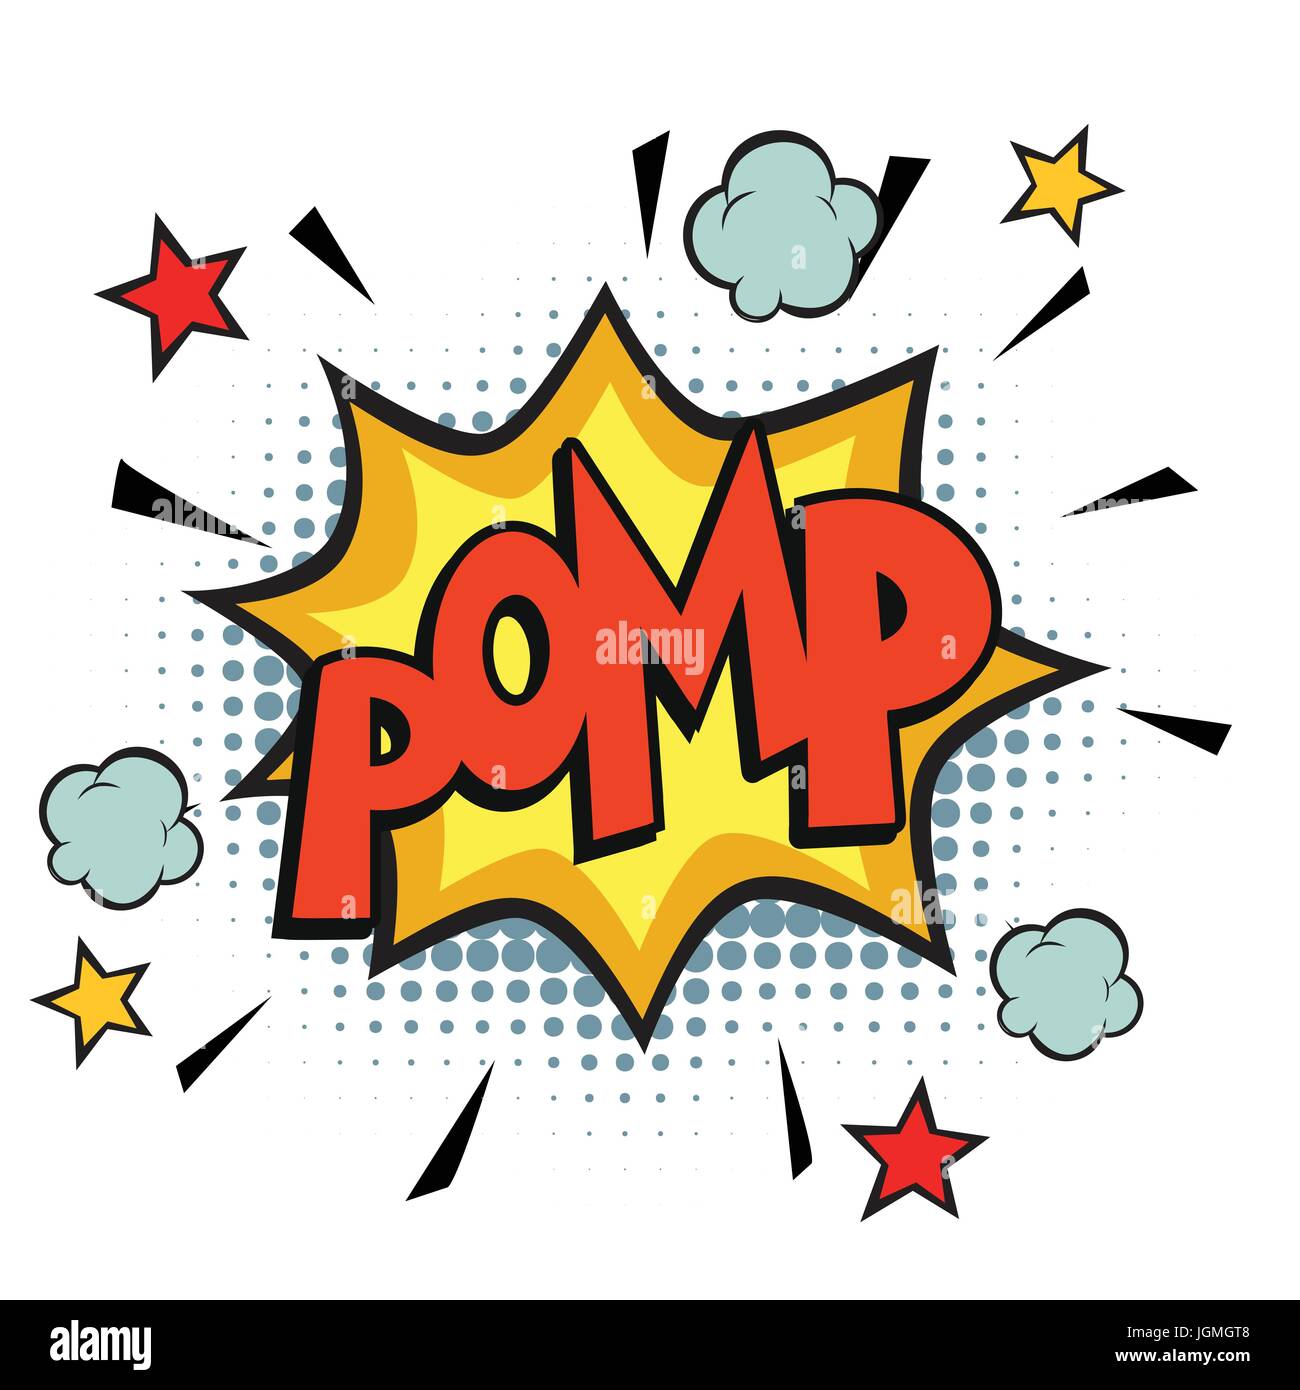 pomp comic word Stock Vector